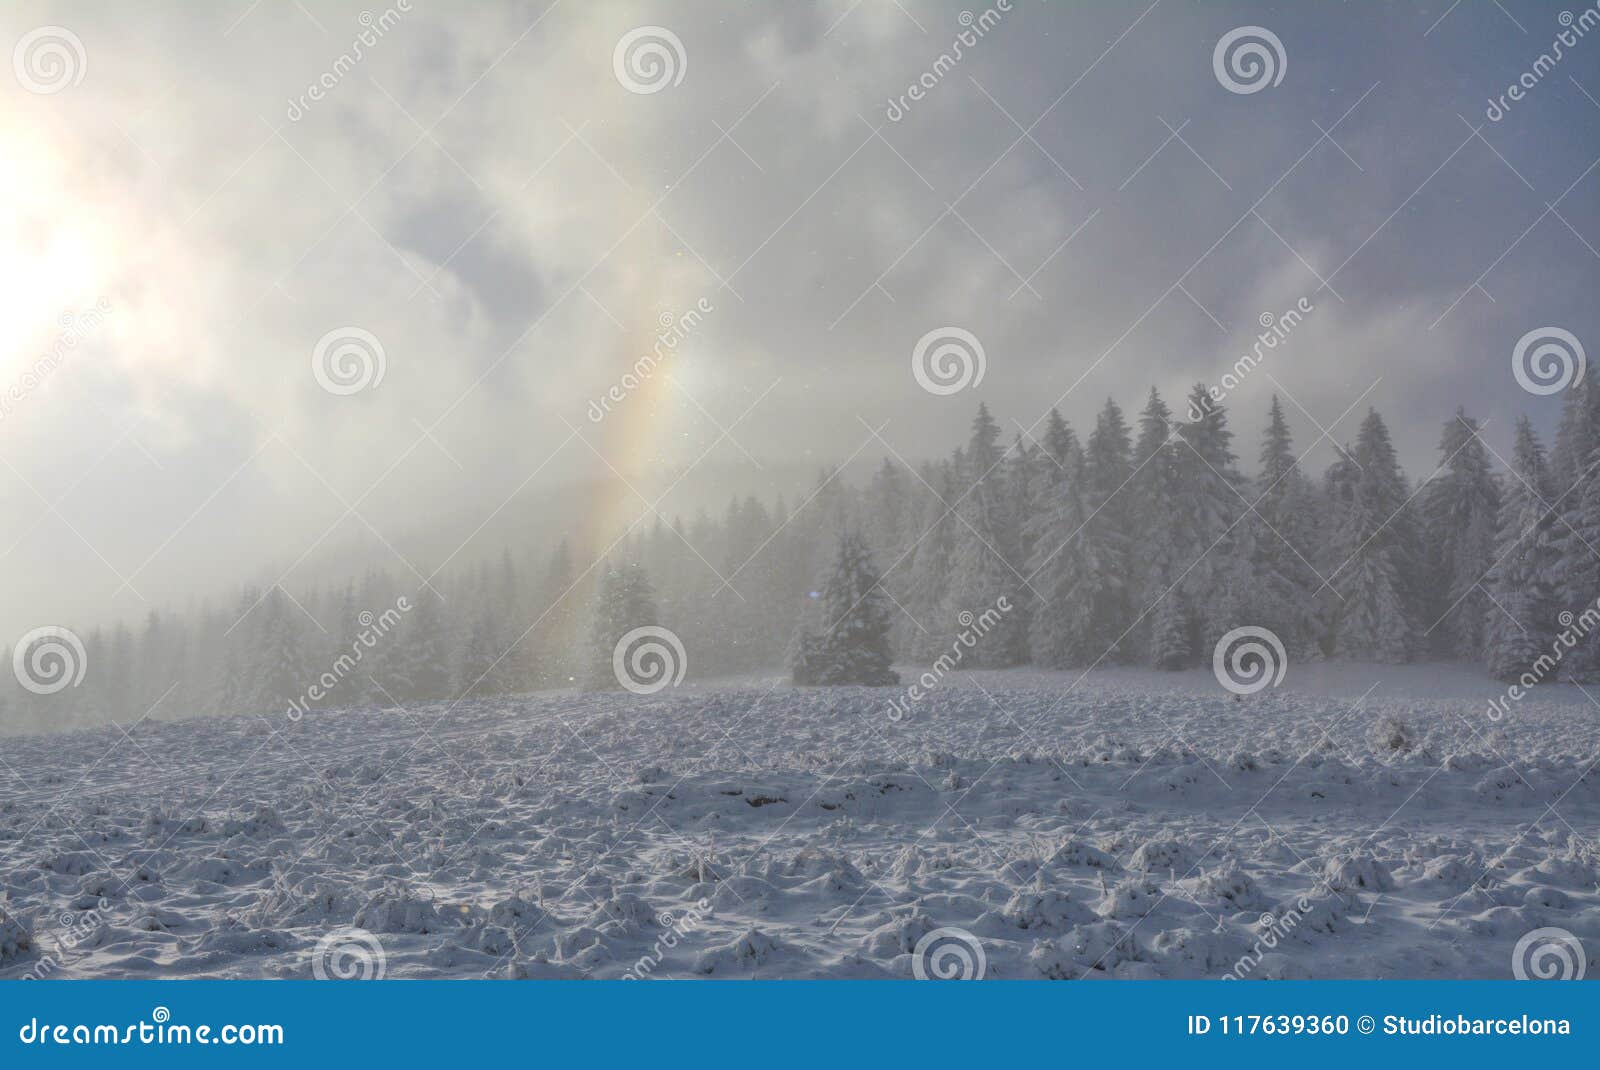 Scenic winter landscape stock photo. Image of trees - 117639360